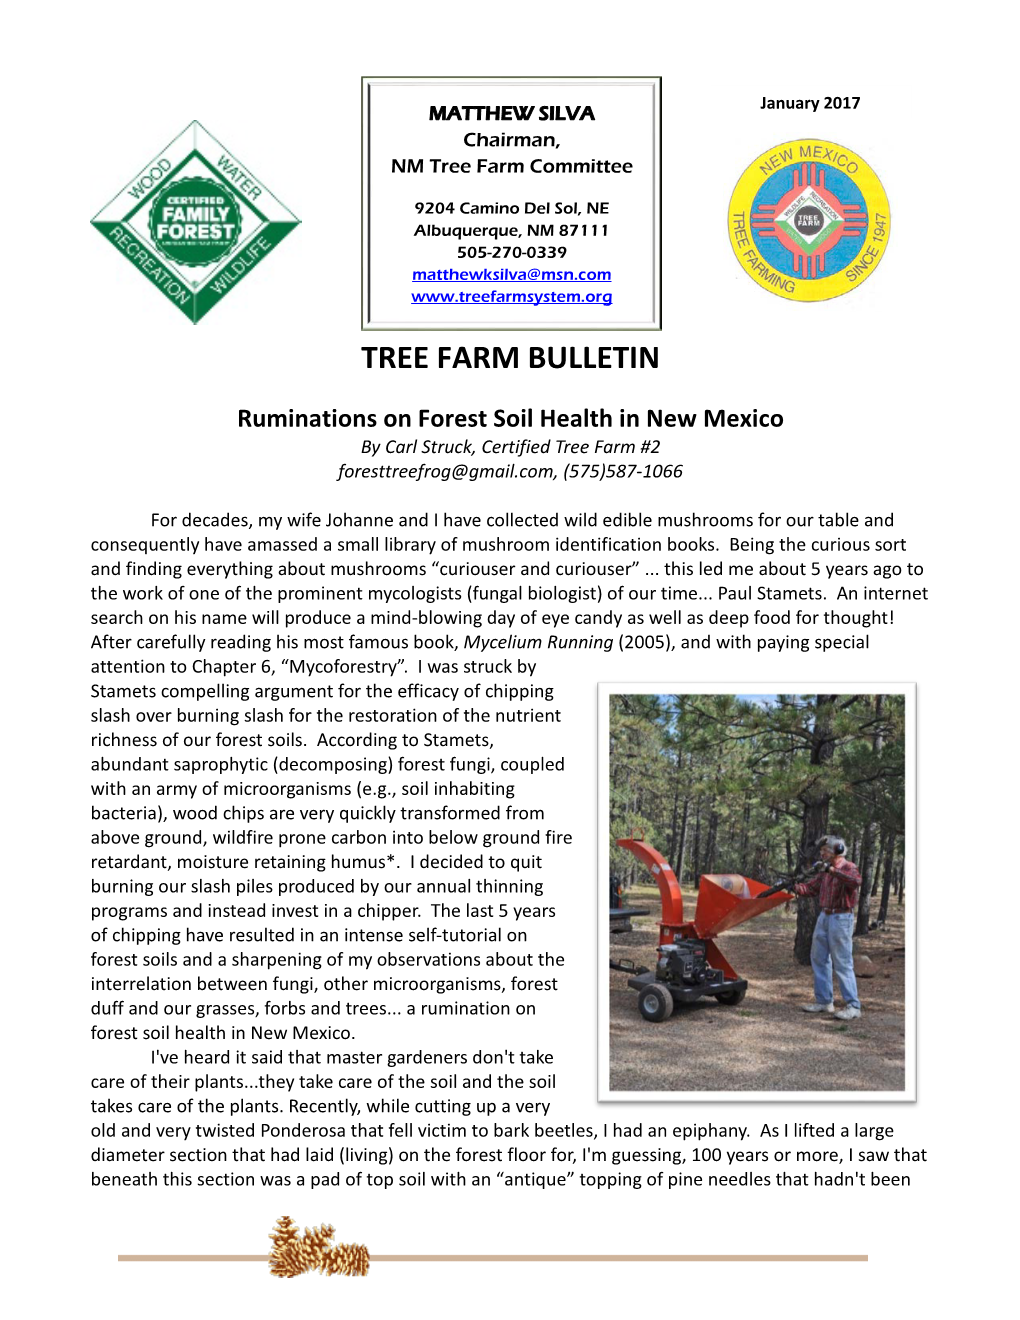 Tree Farm Bulletin